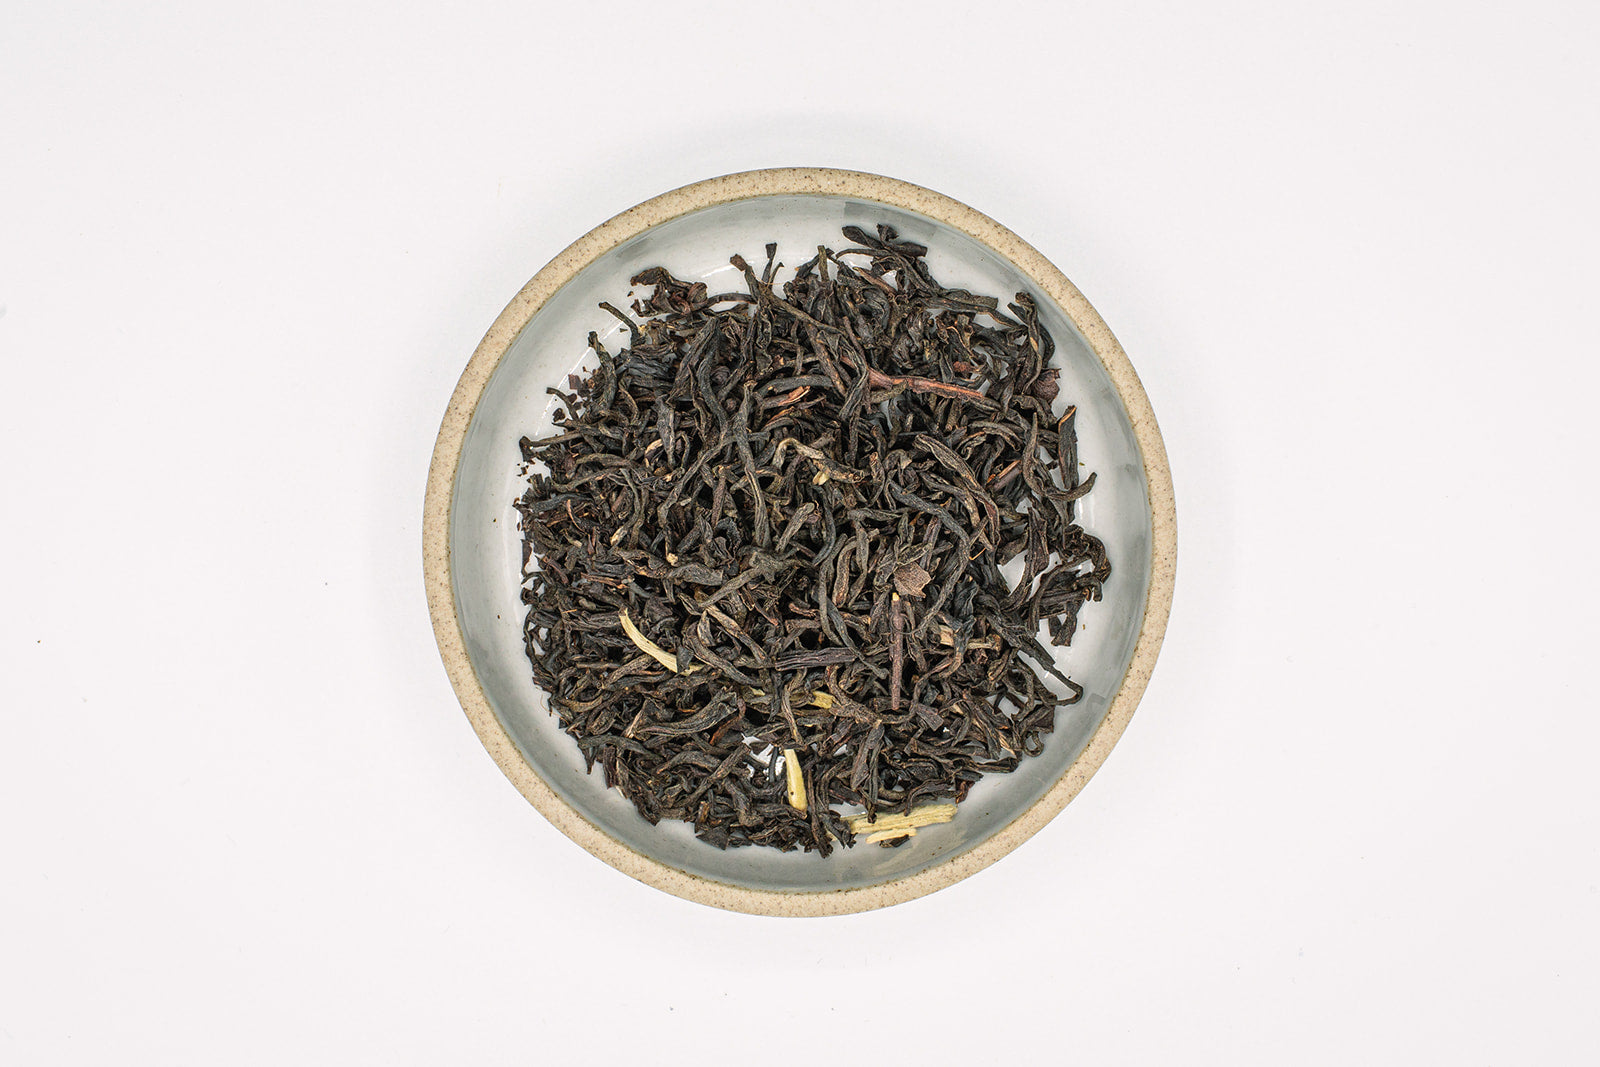 Royal Earl Grey Tea